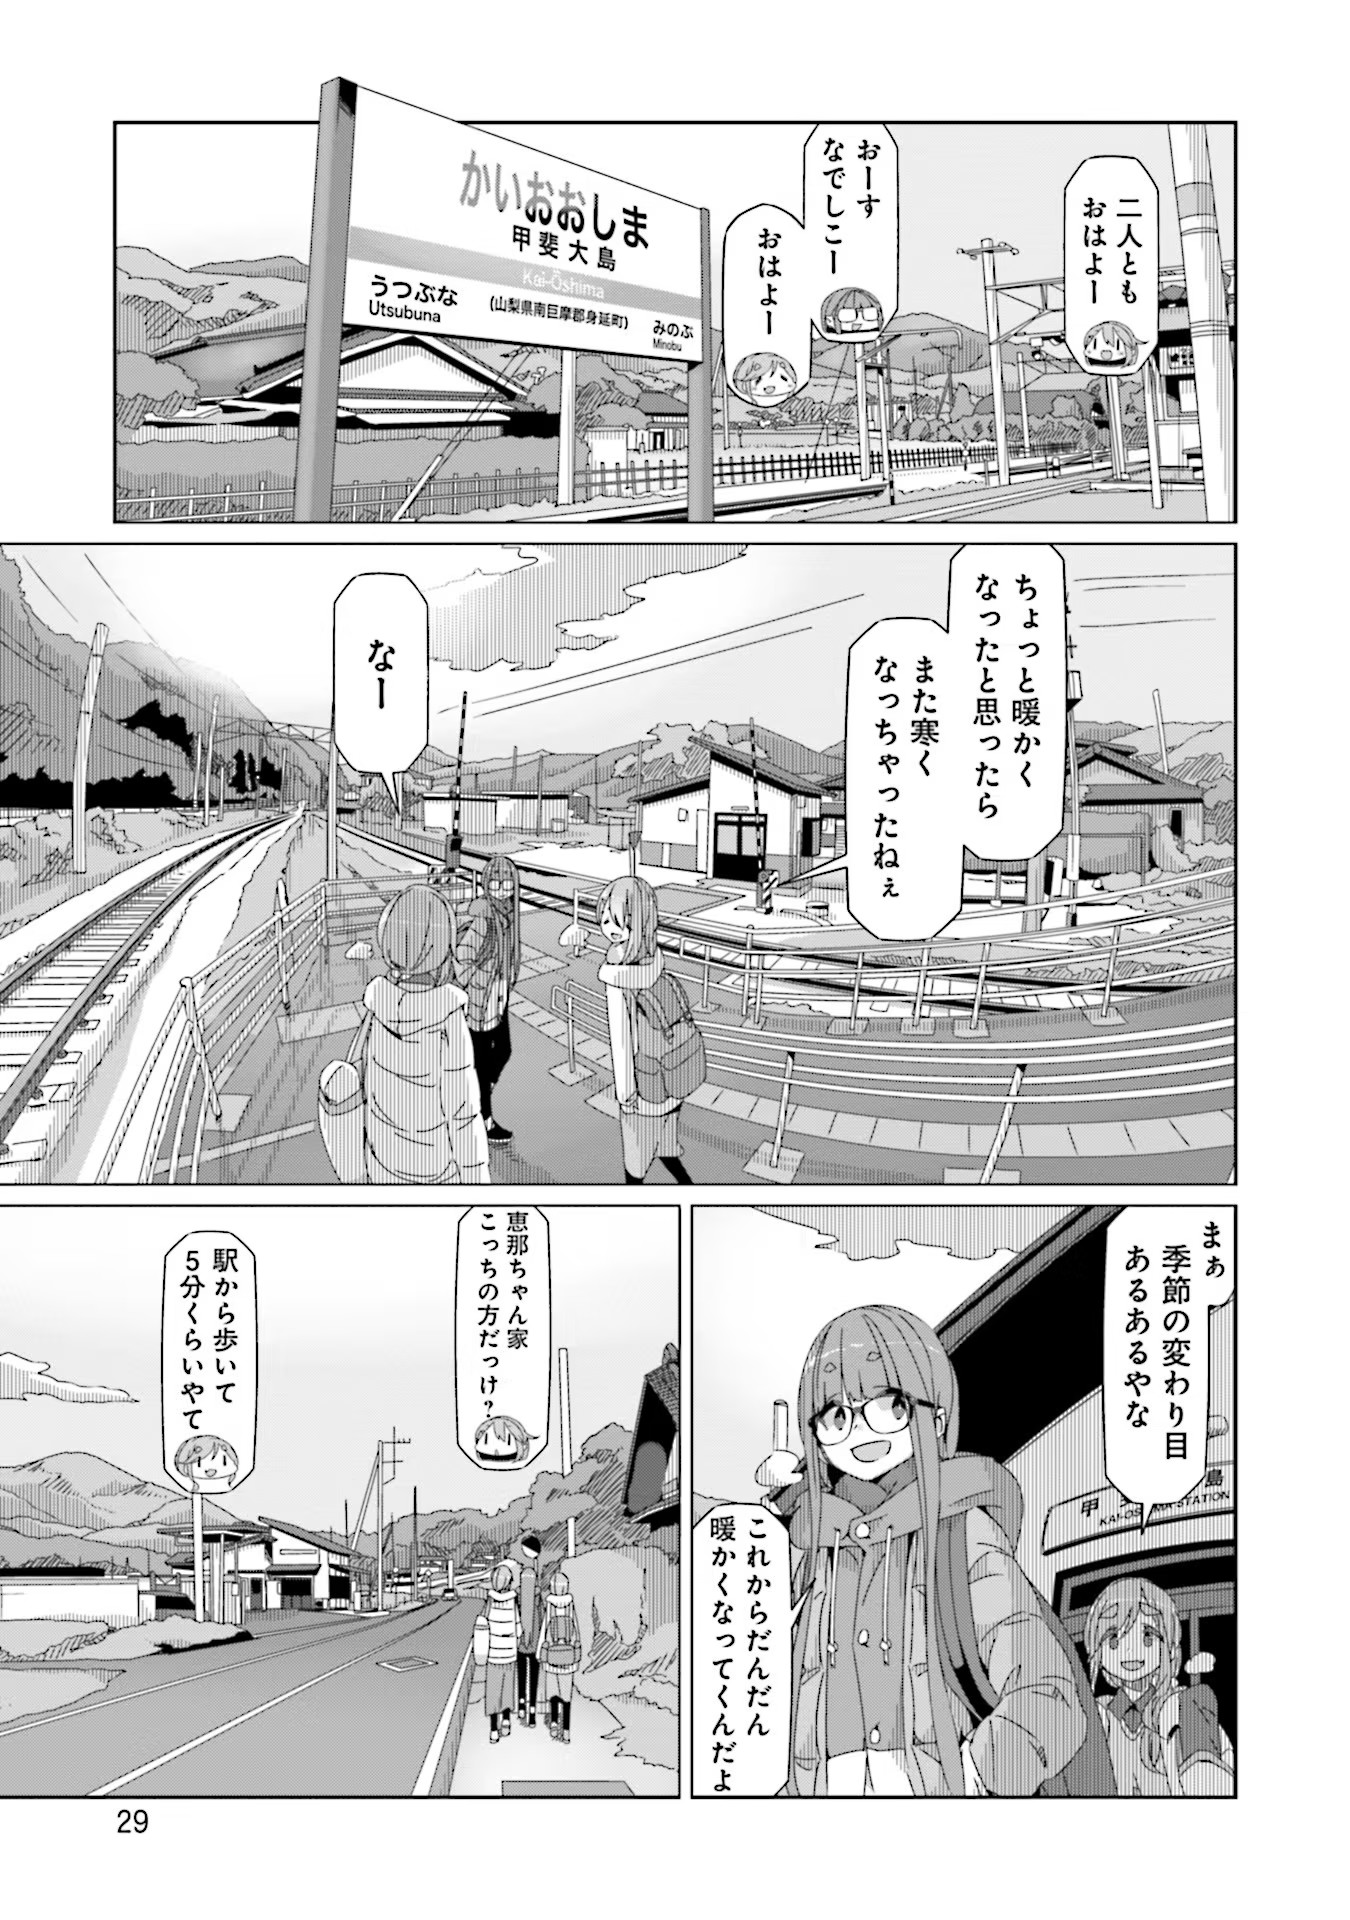 Yuru Camp - Chapter 54 - Page 1